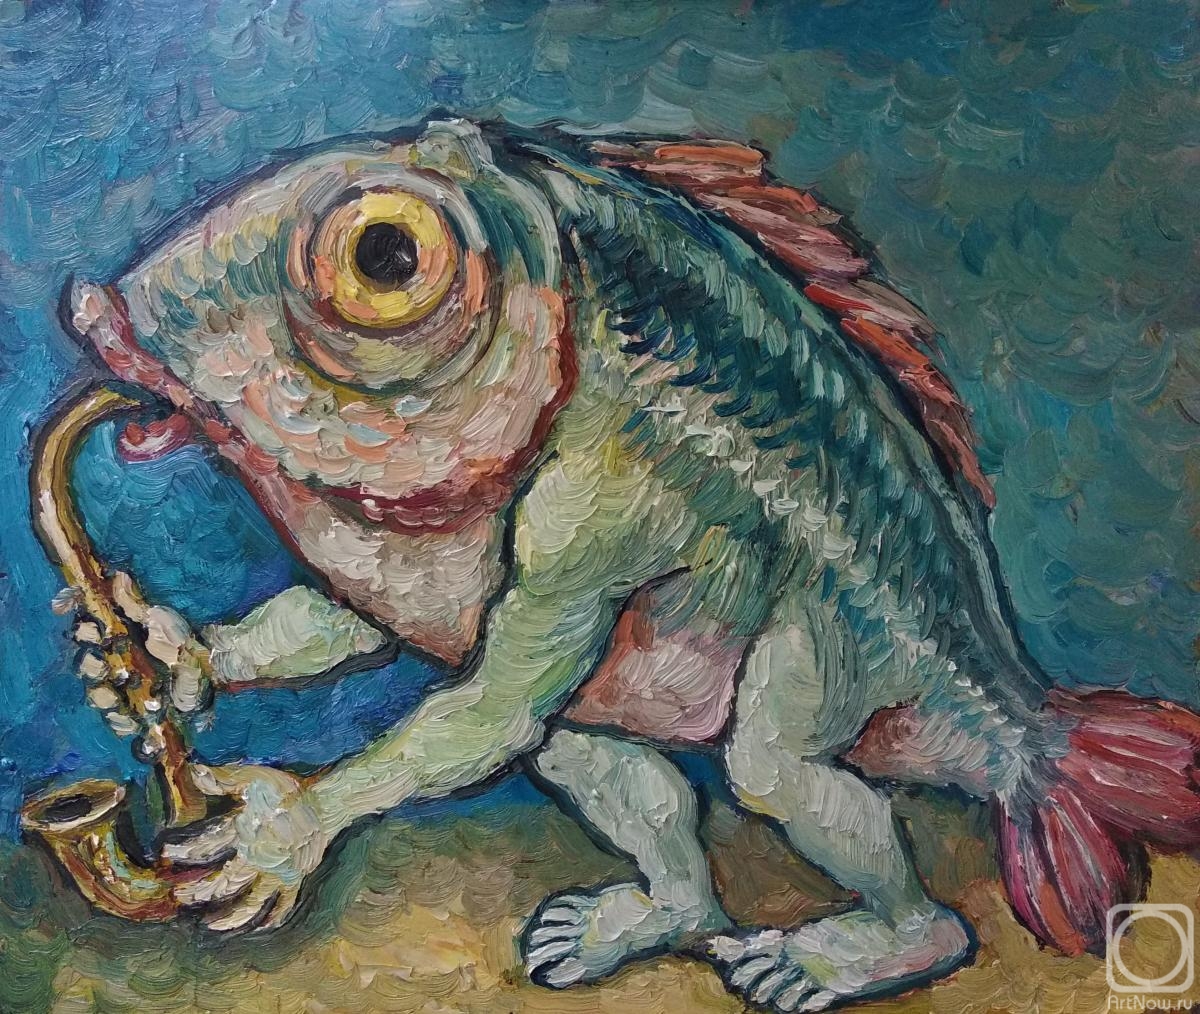 Yaguzhinskaya Anna. Fish on sax